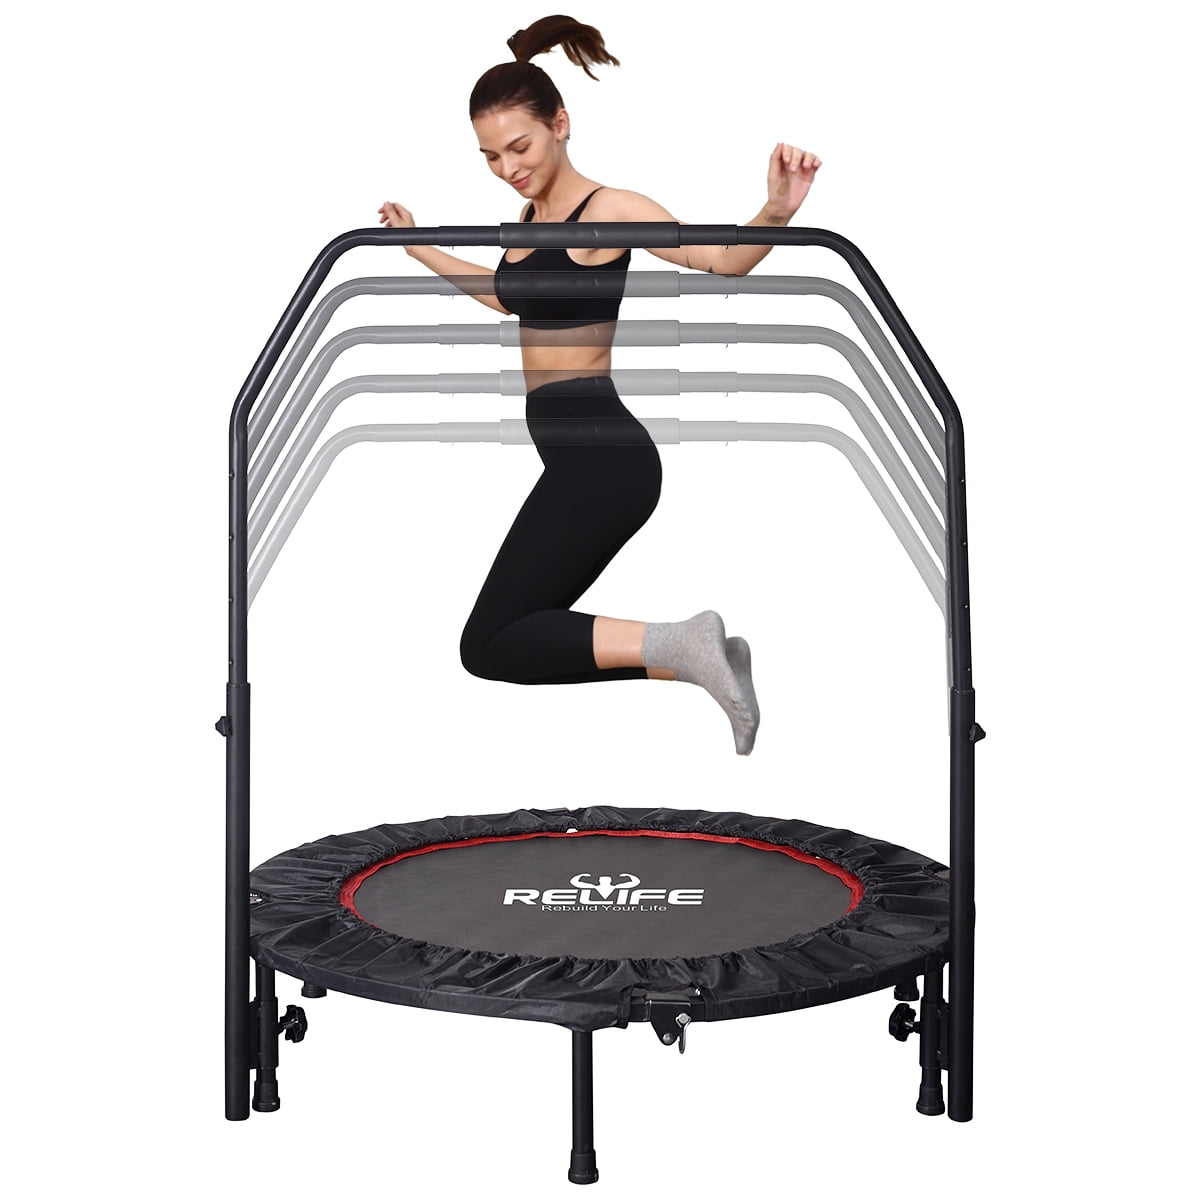 Mini Exercise Trampoline Adult Kid Fitness Rebounder Trampoline Indoor -  Bed Bath & Beyond - 35757050